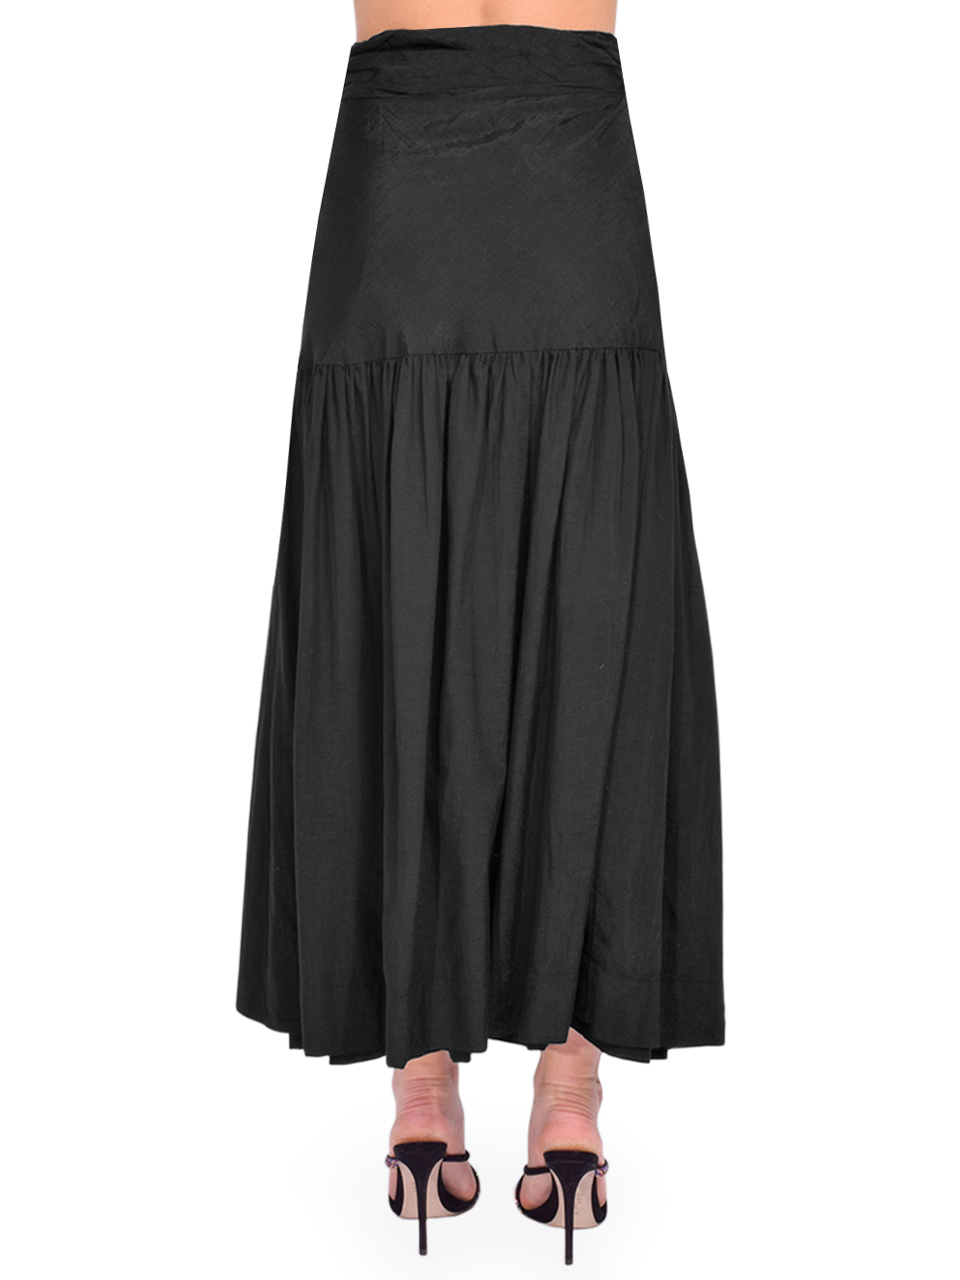 Karina Grimaldi Bette Midi Skirt in Black Back View 

